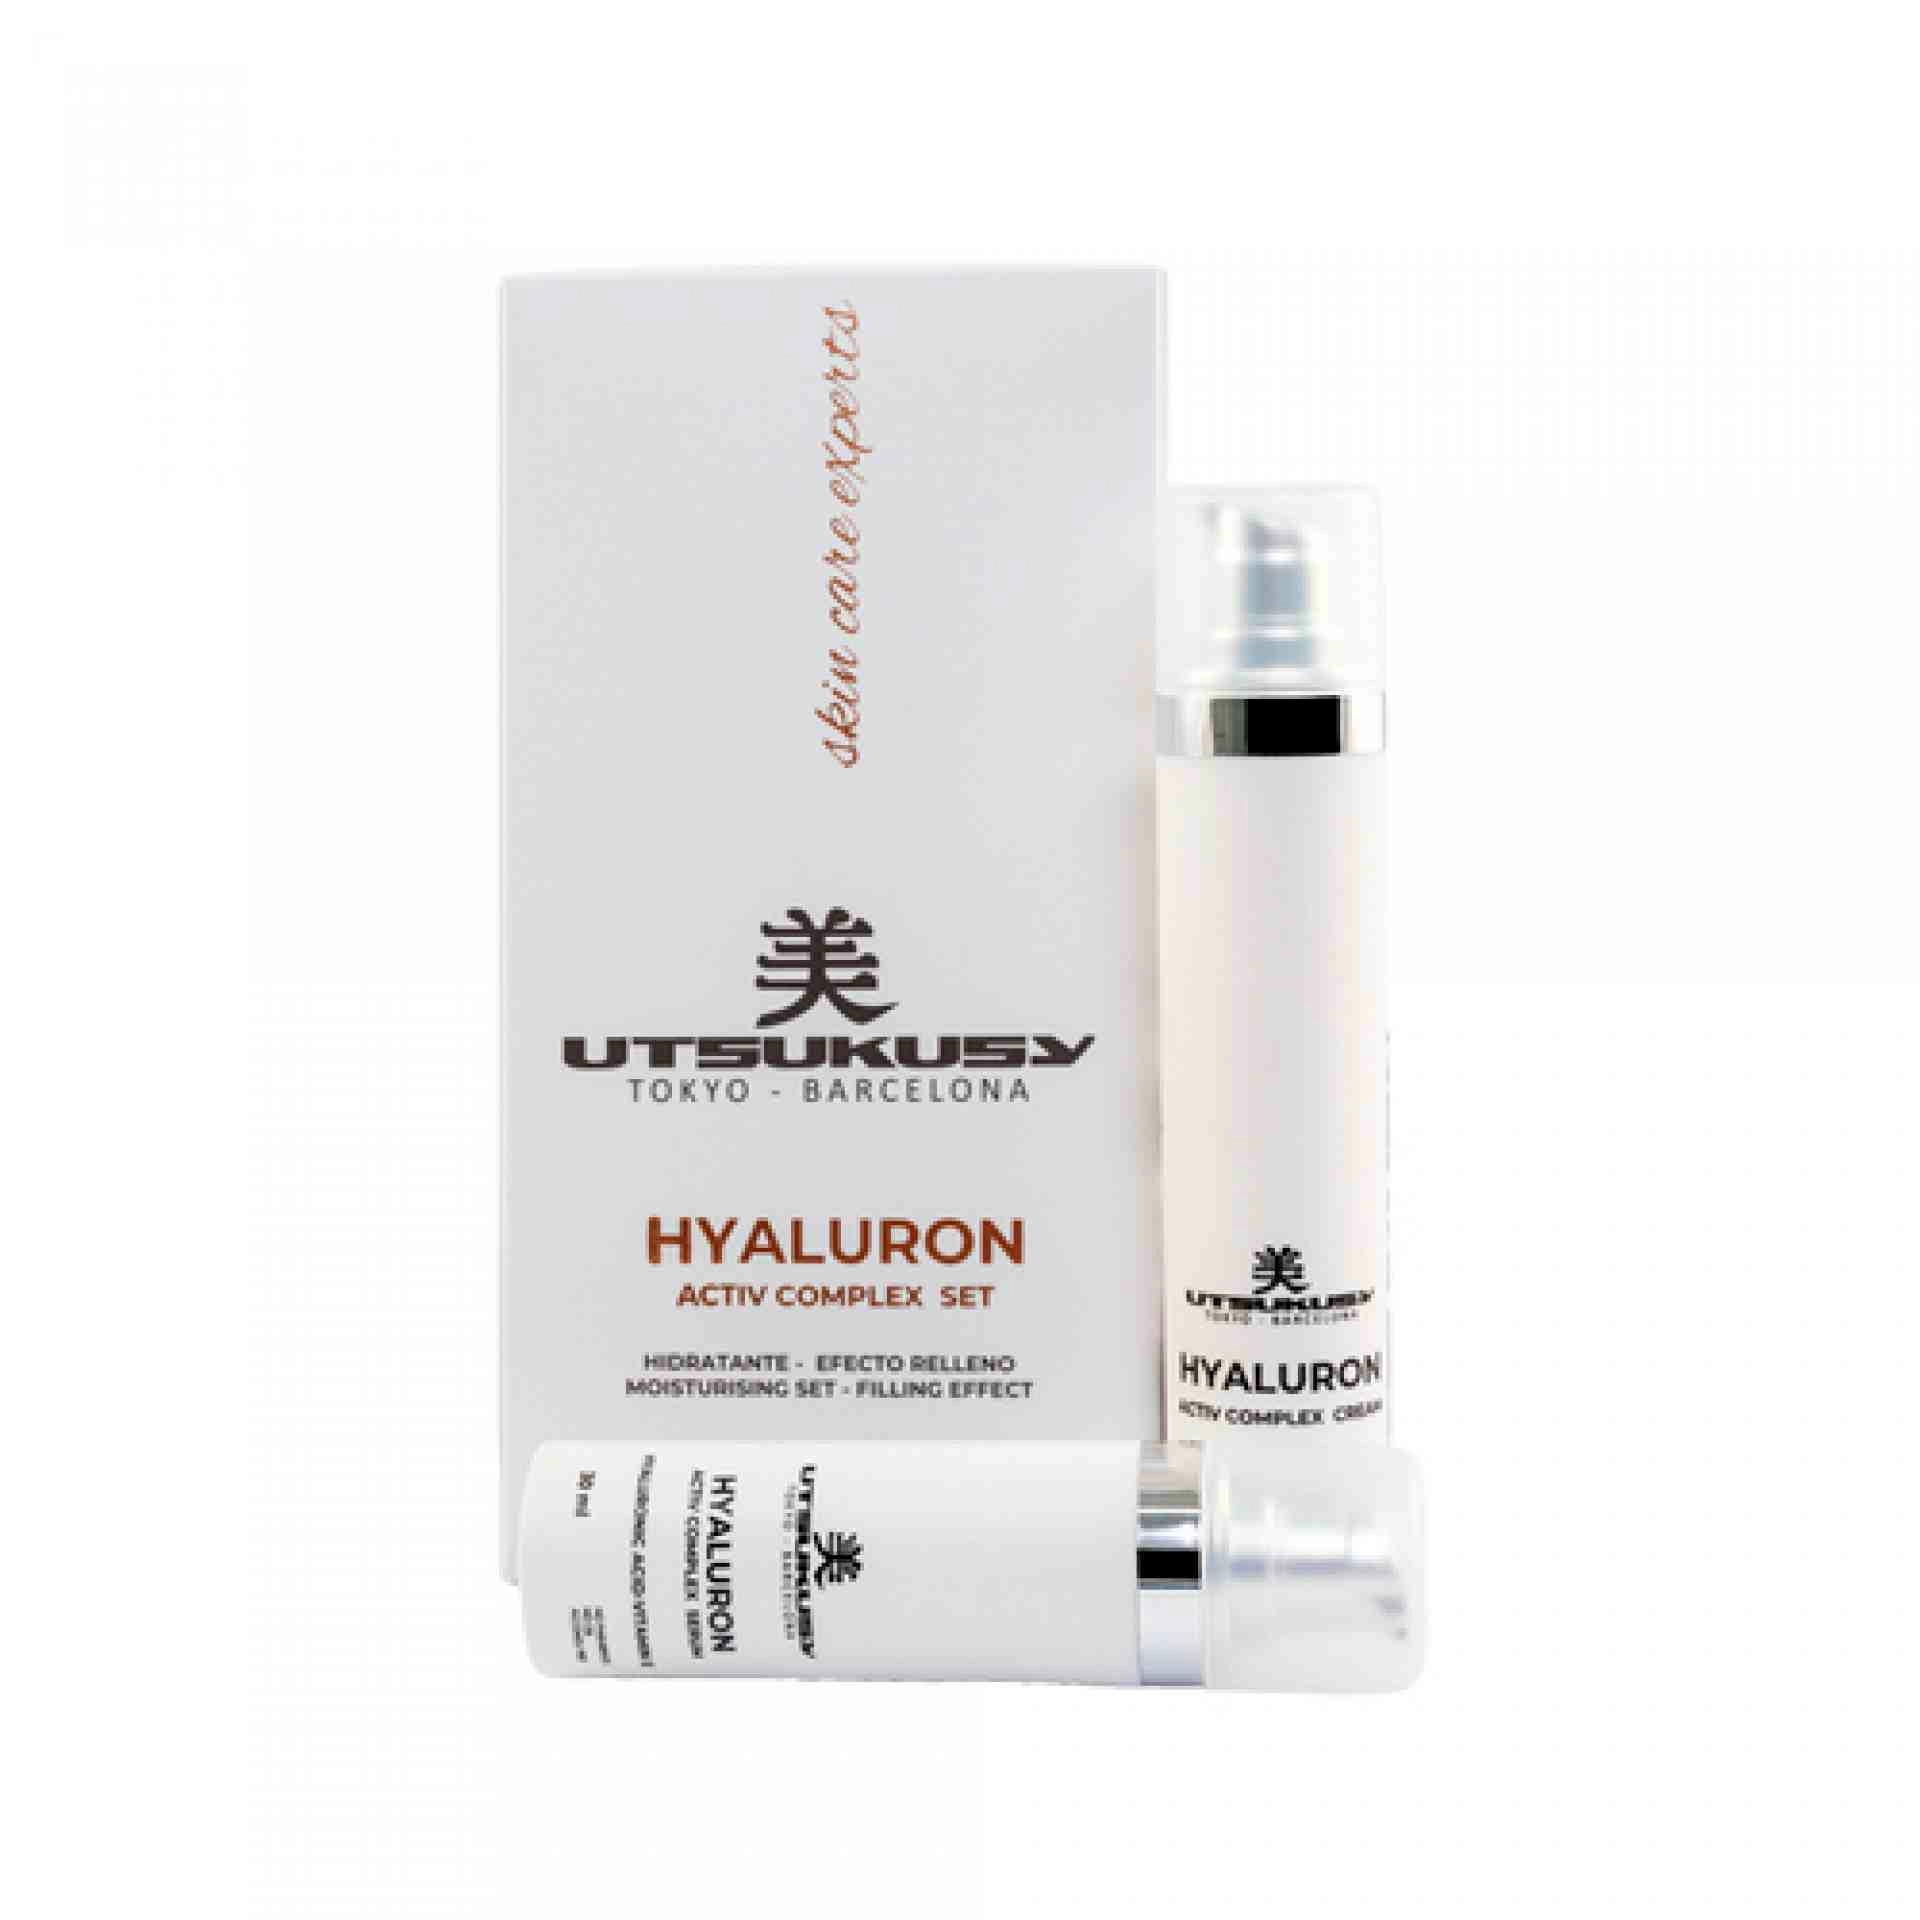 Hyaluron Activ Complex Set | Serum + Crema Facial Hyaluron - Utsukusy ®